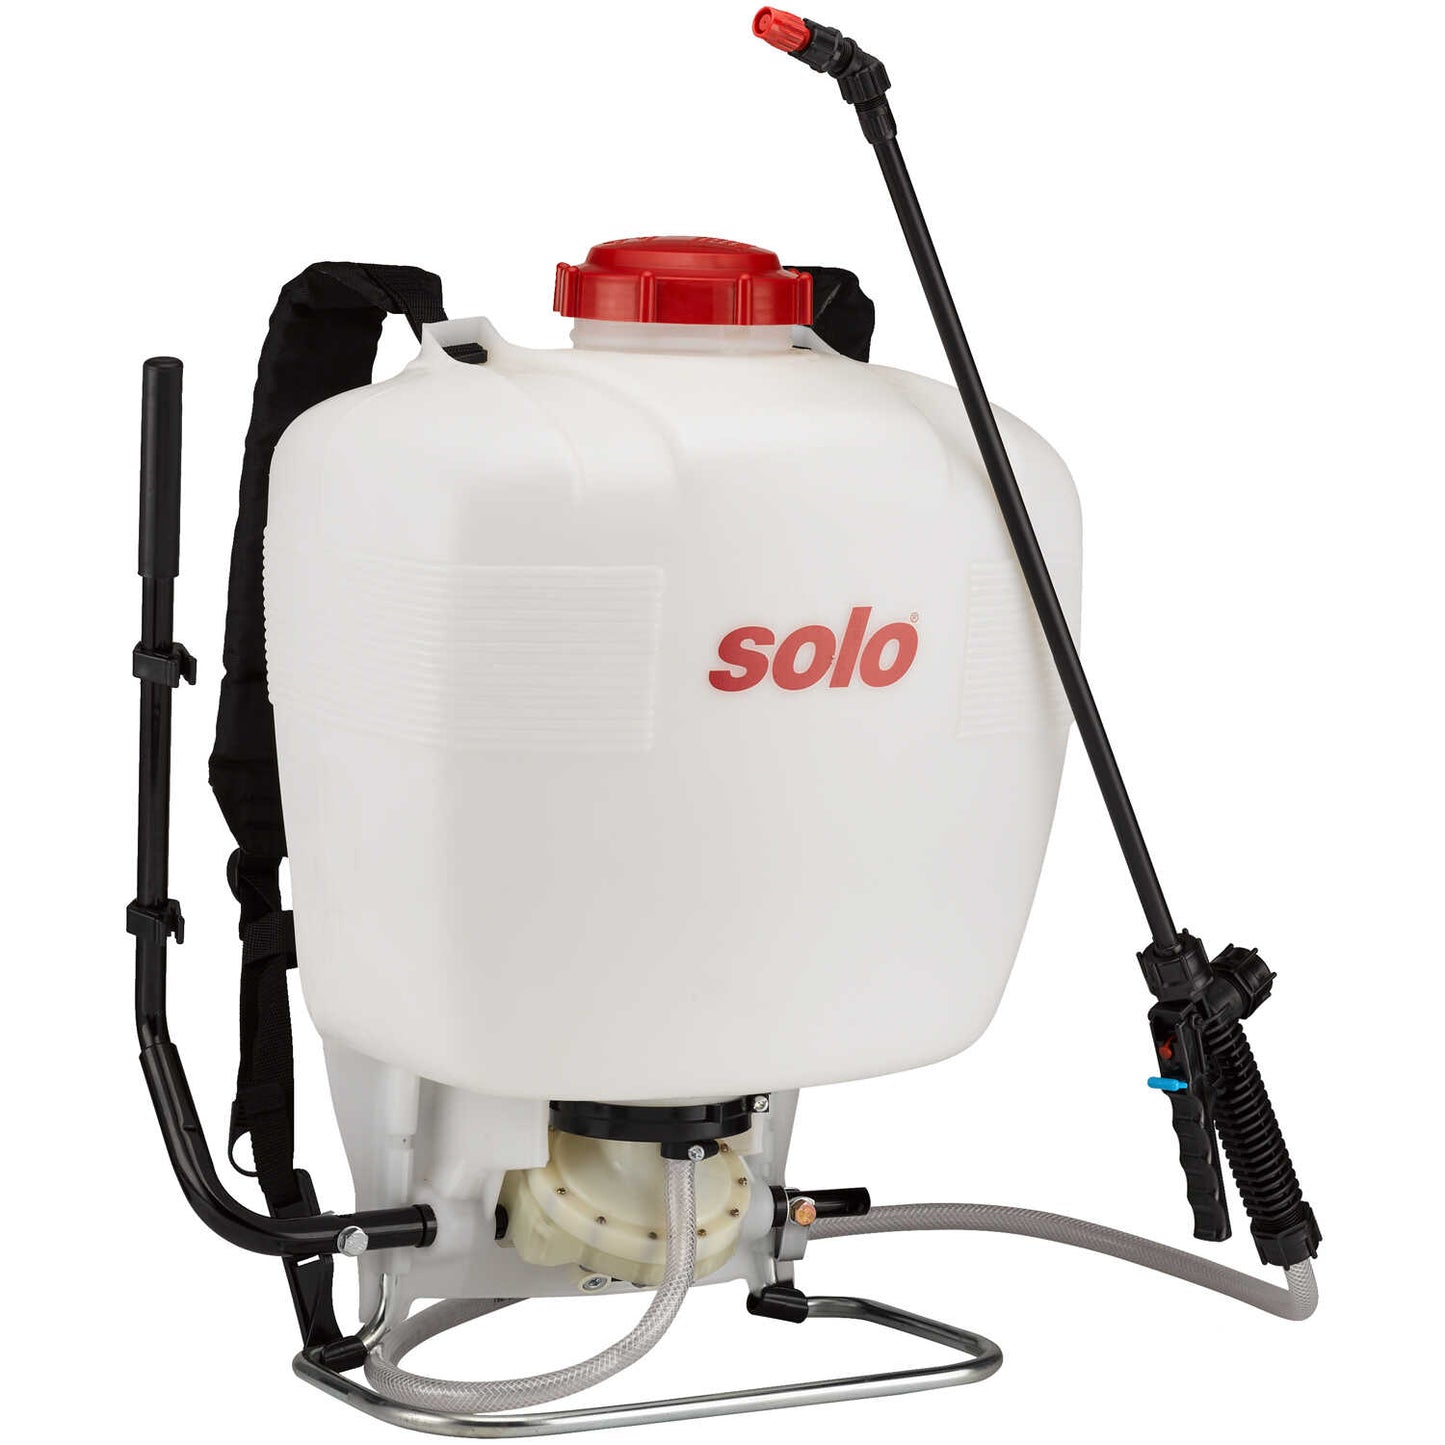 Solo 101 Series Backpack Sprayers 4-Gallon Capacity Model 475-101